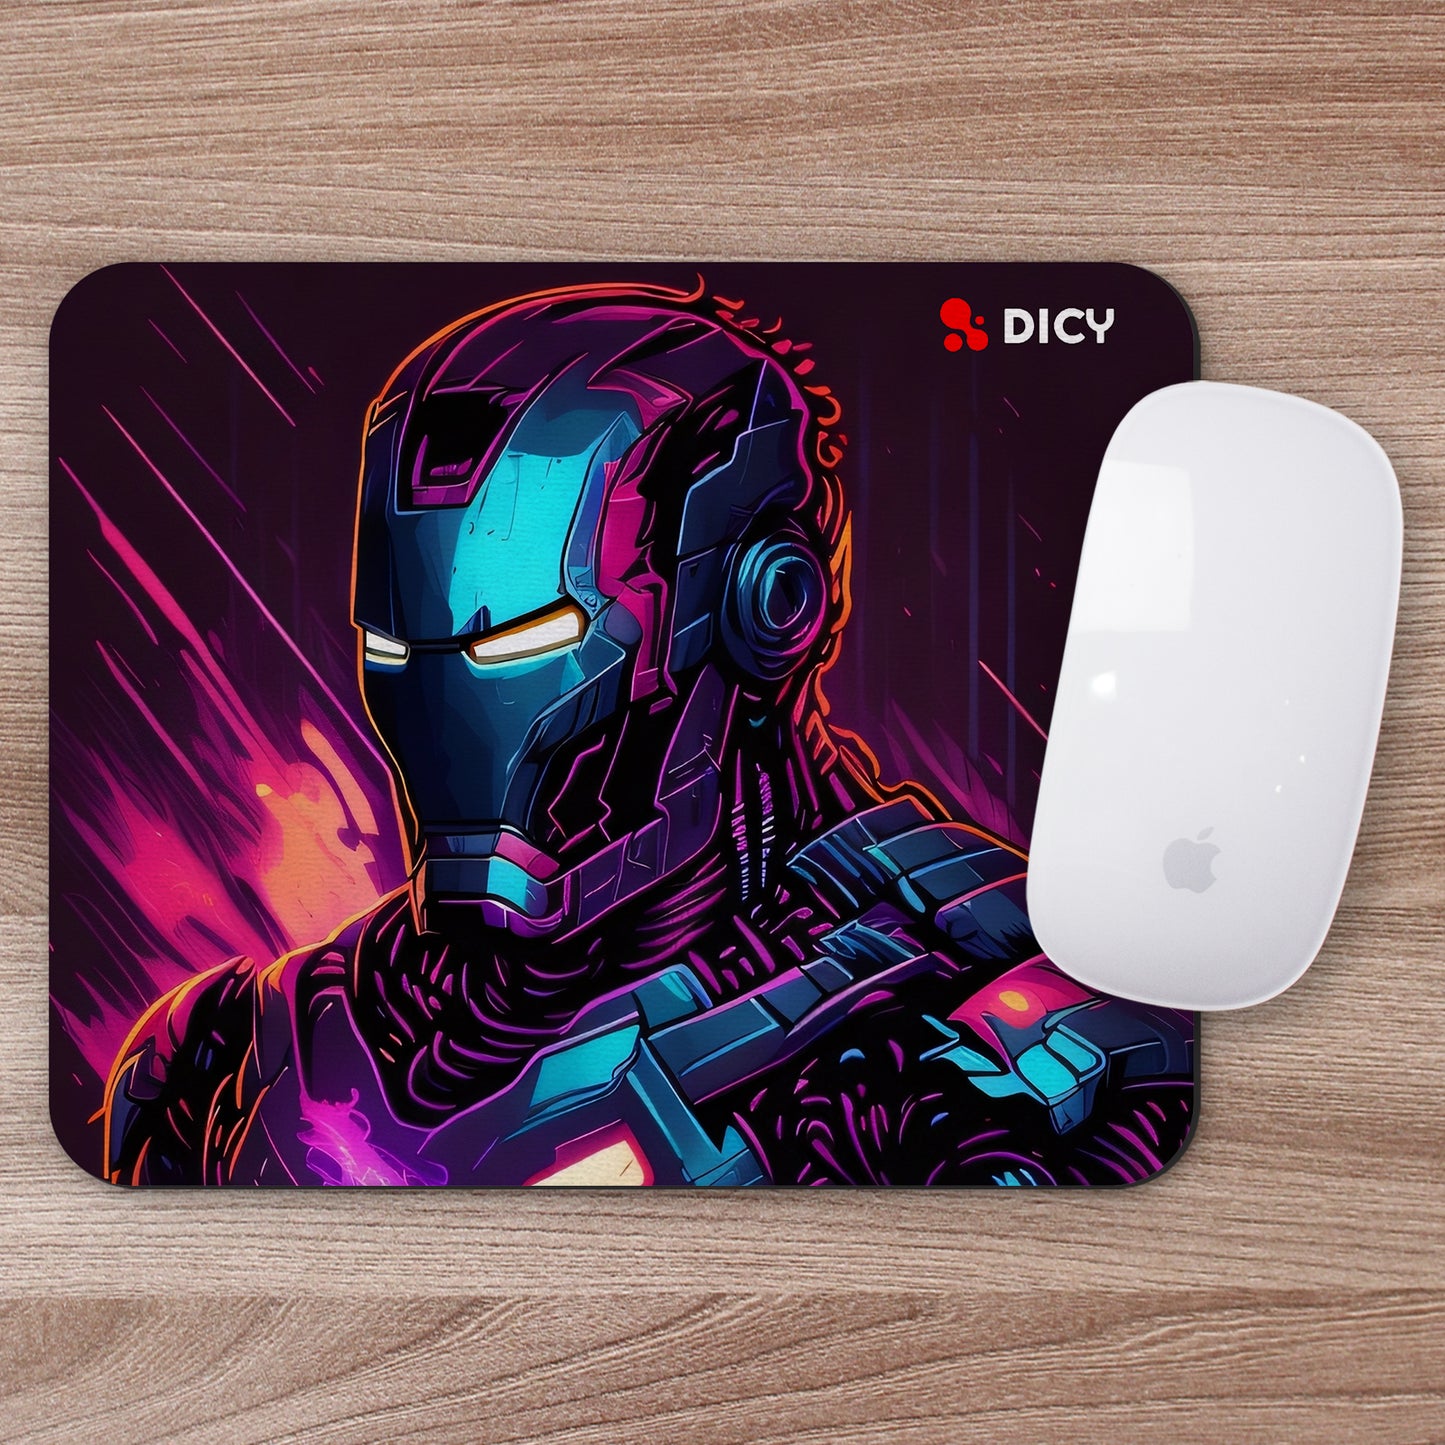 Mouse pad for Laptop Desktop PC | Iron man